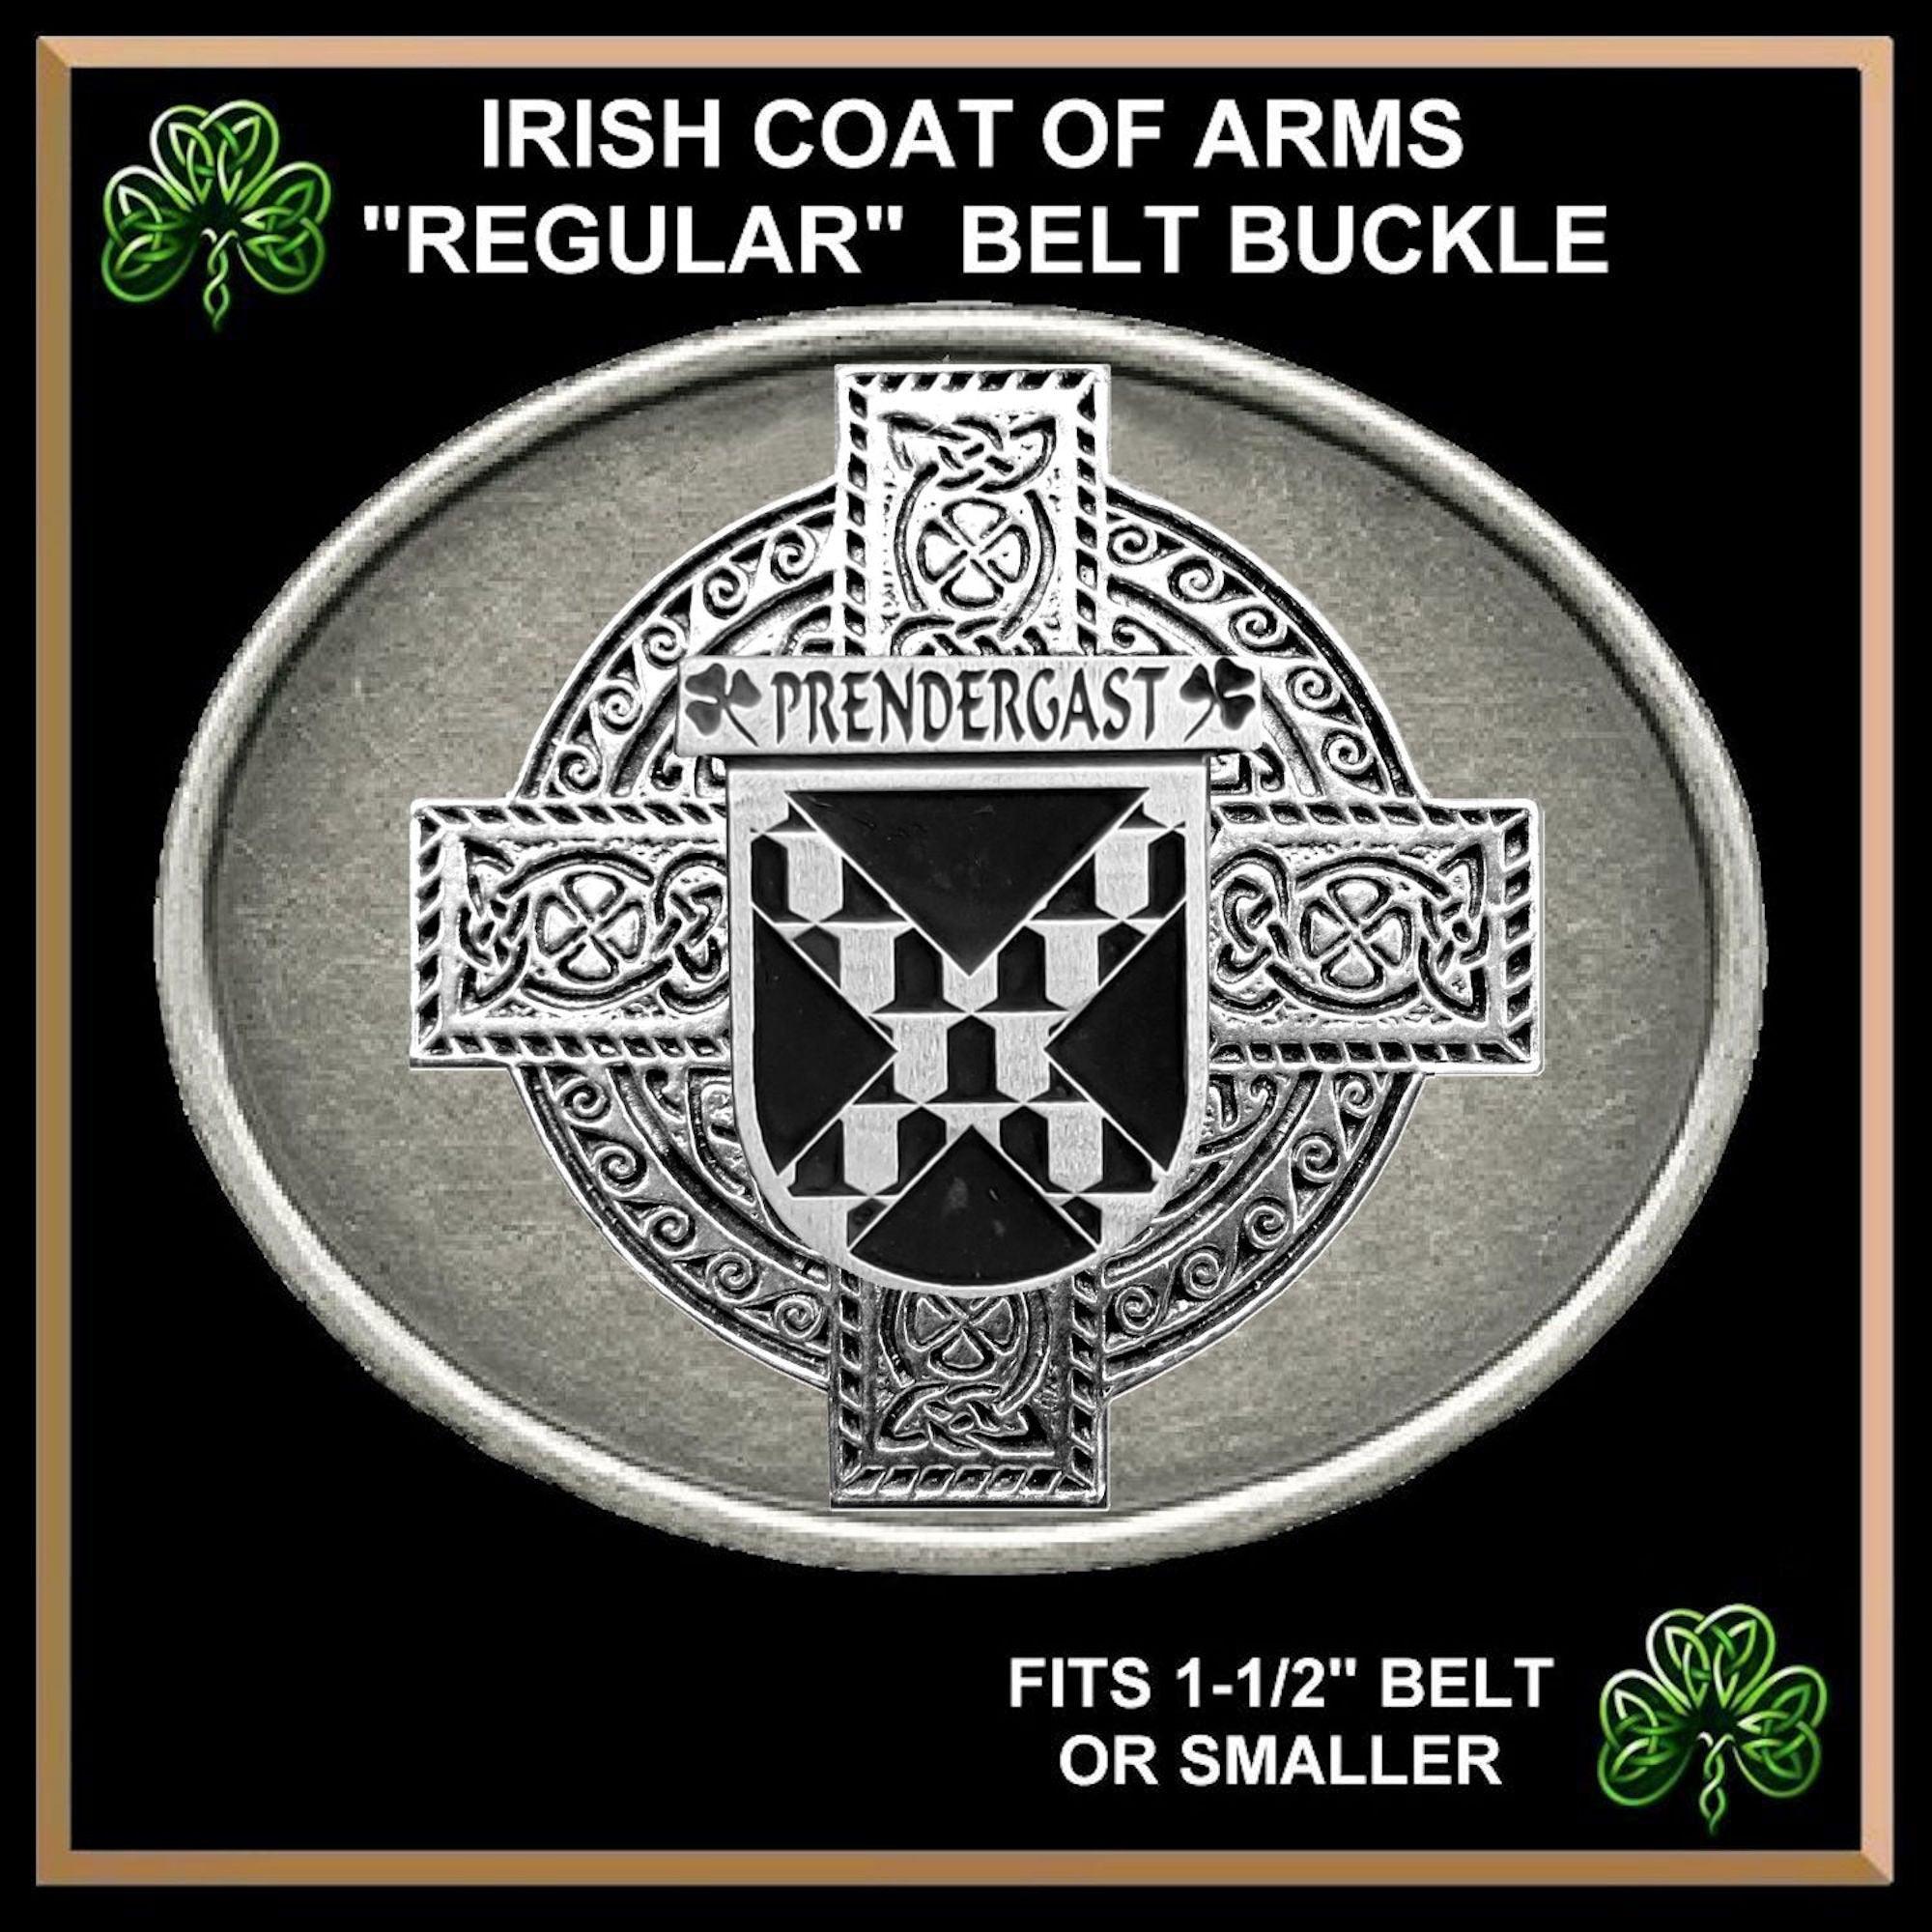 Prendergast Irish Coat of Arms Regular Buckle